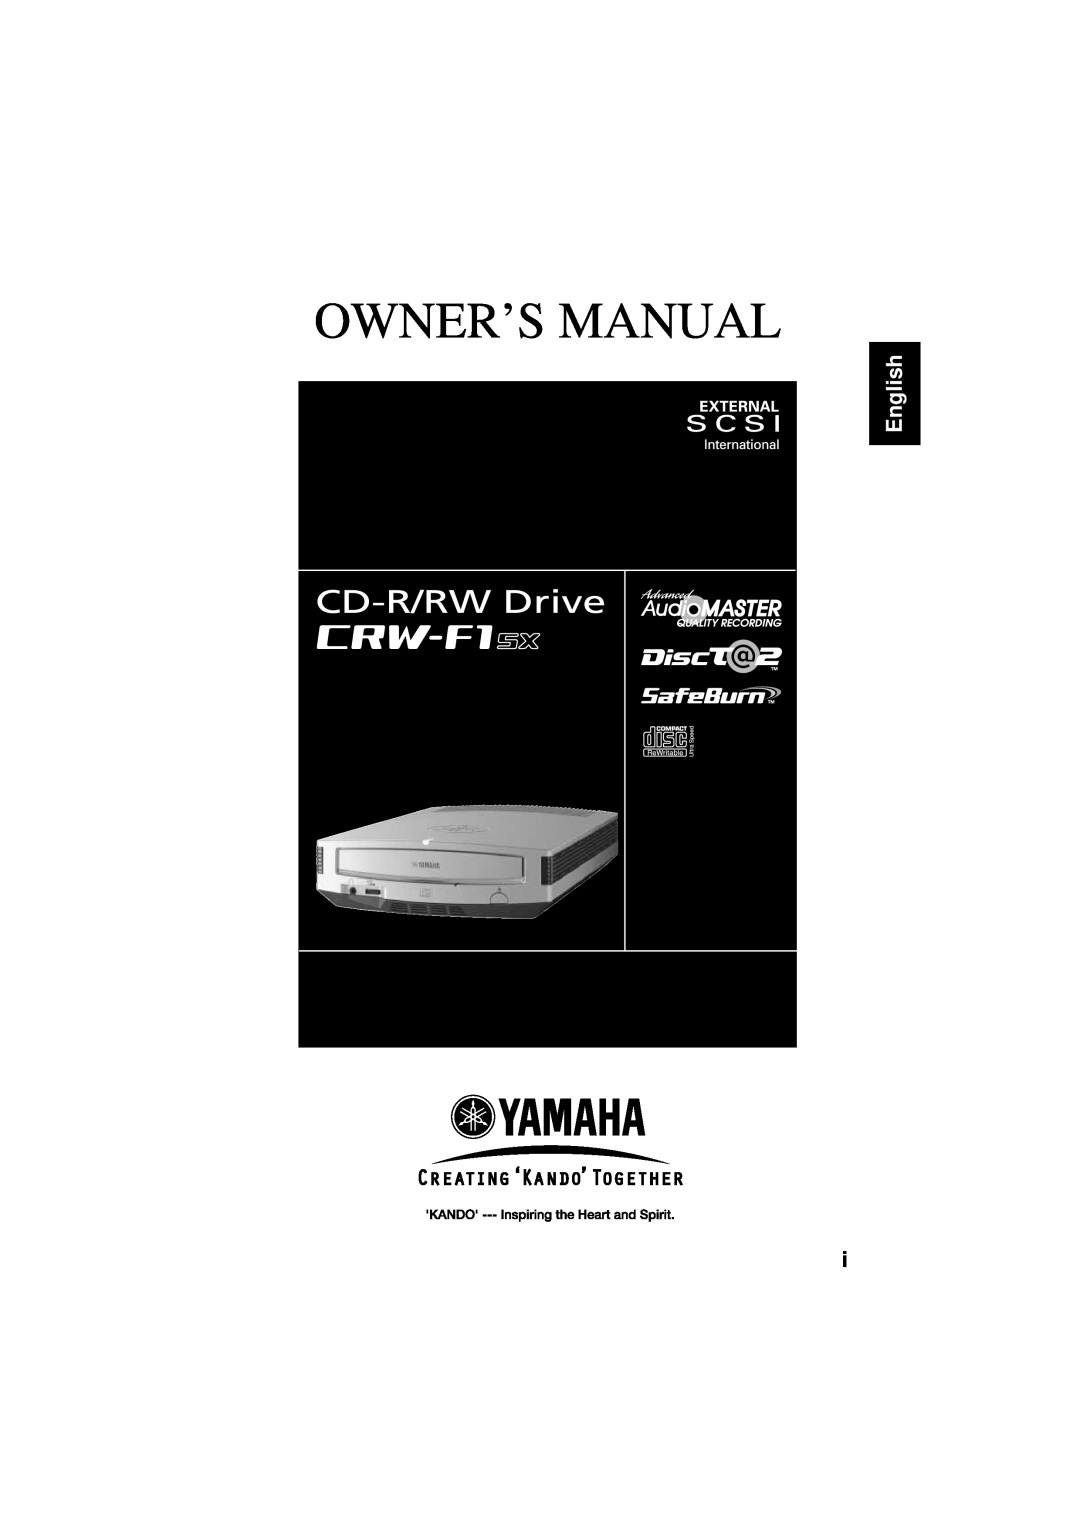 Yamaha CRW-F1SX manual English, Owner’S Manual 